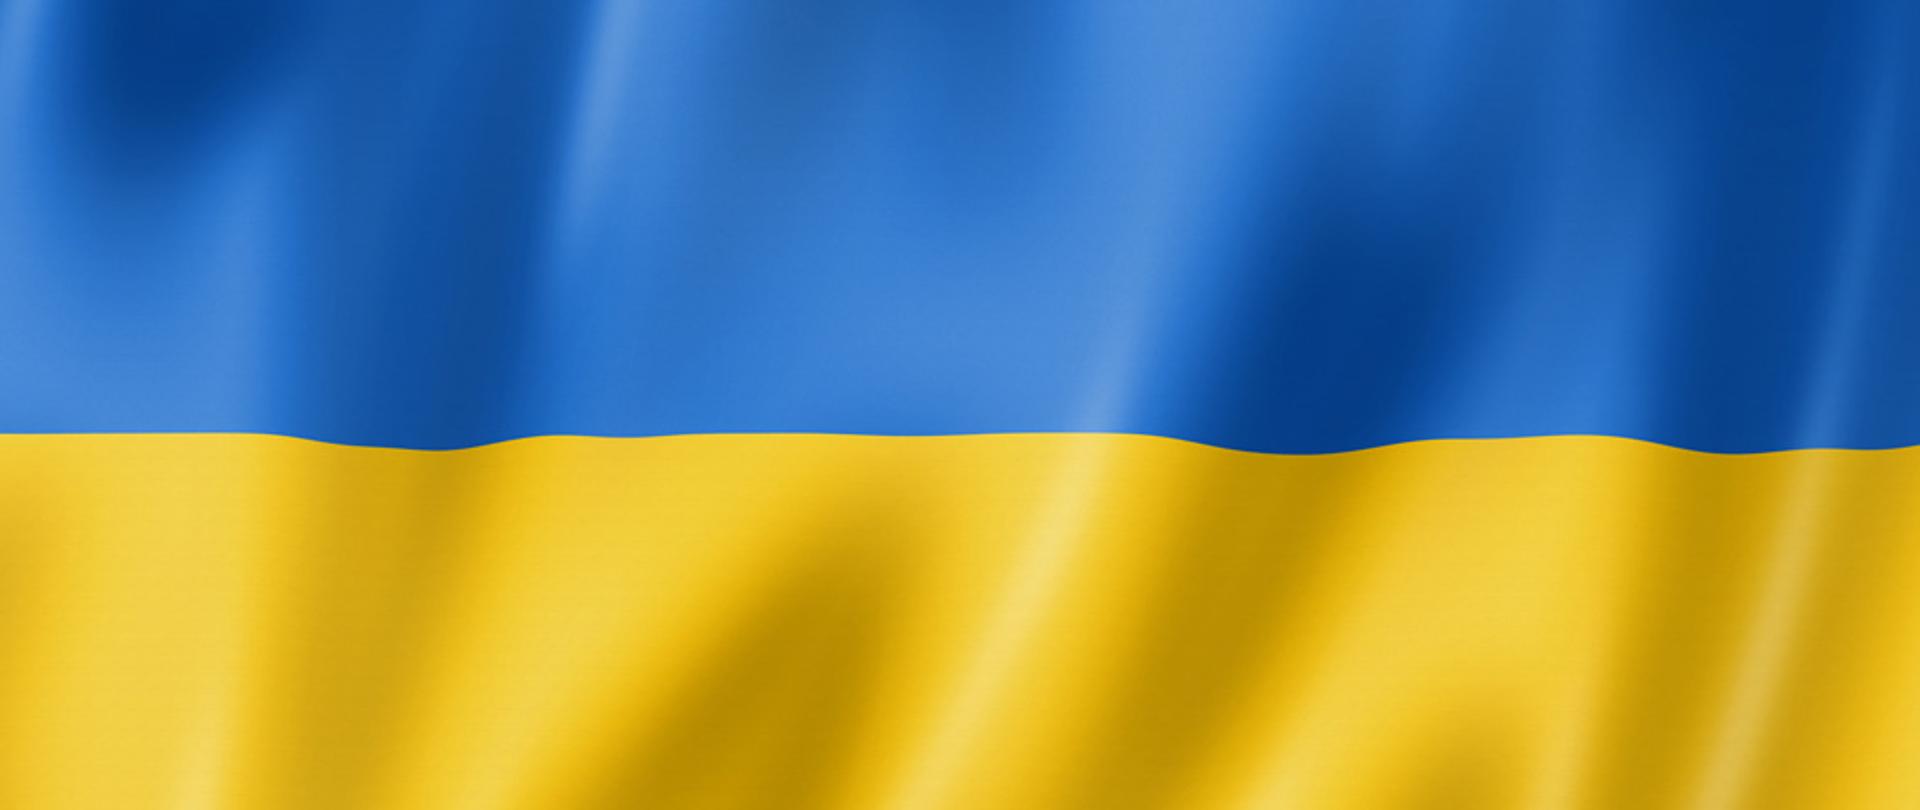 Niebiesko-żółta flaga